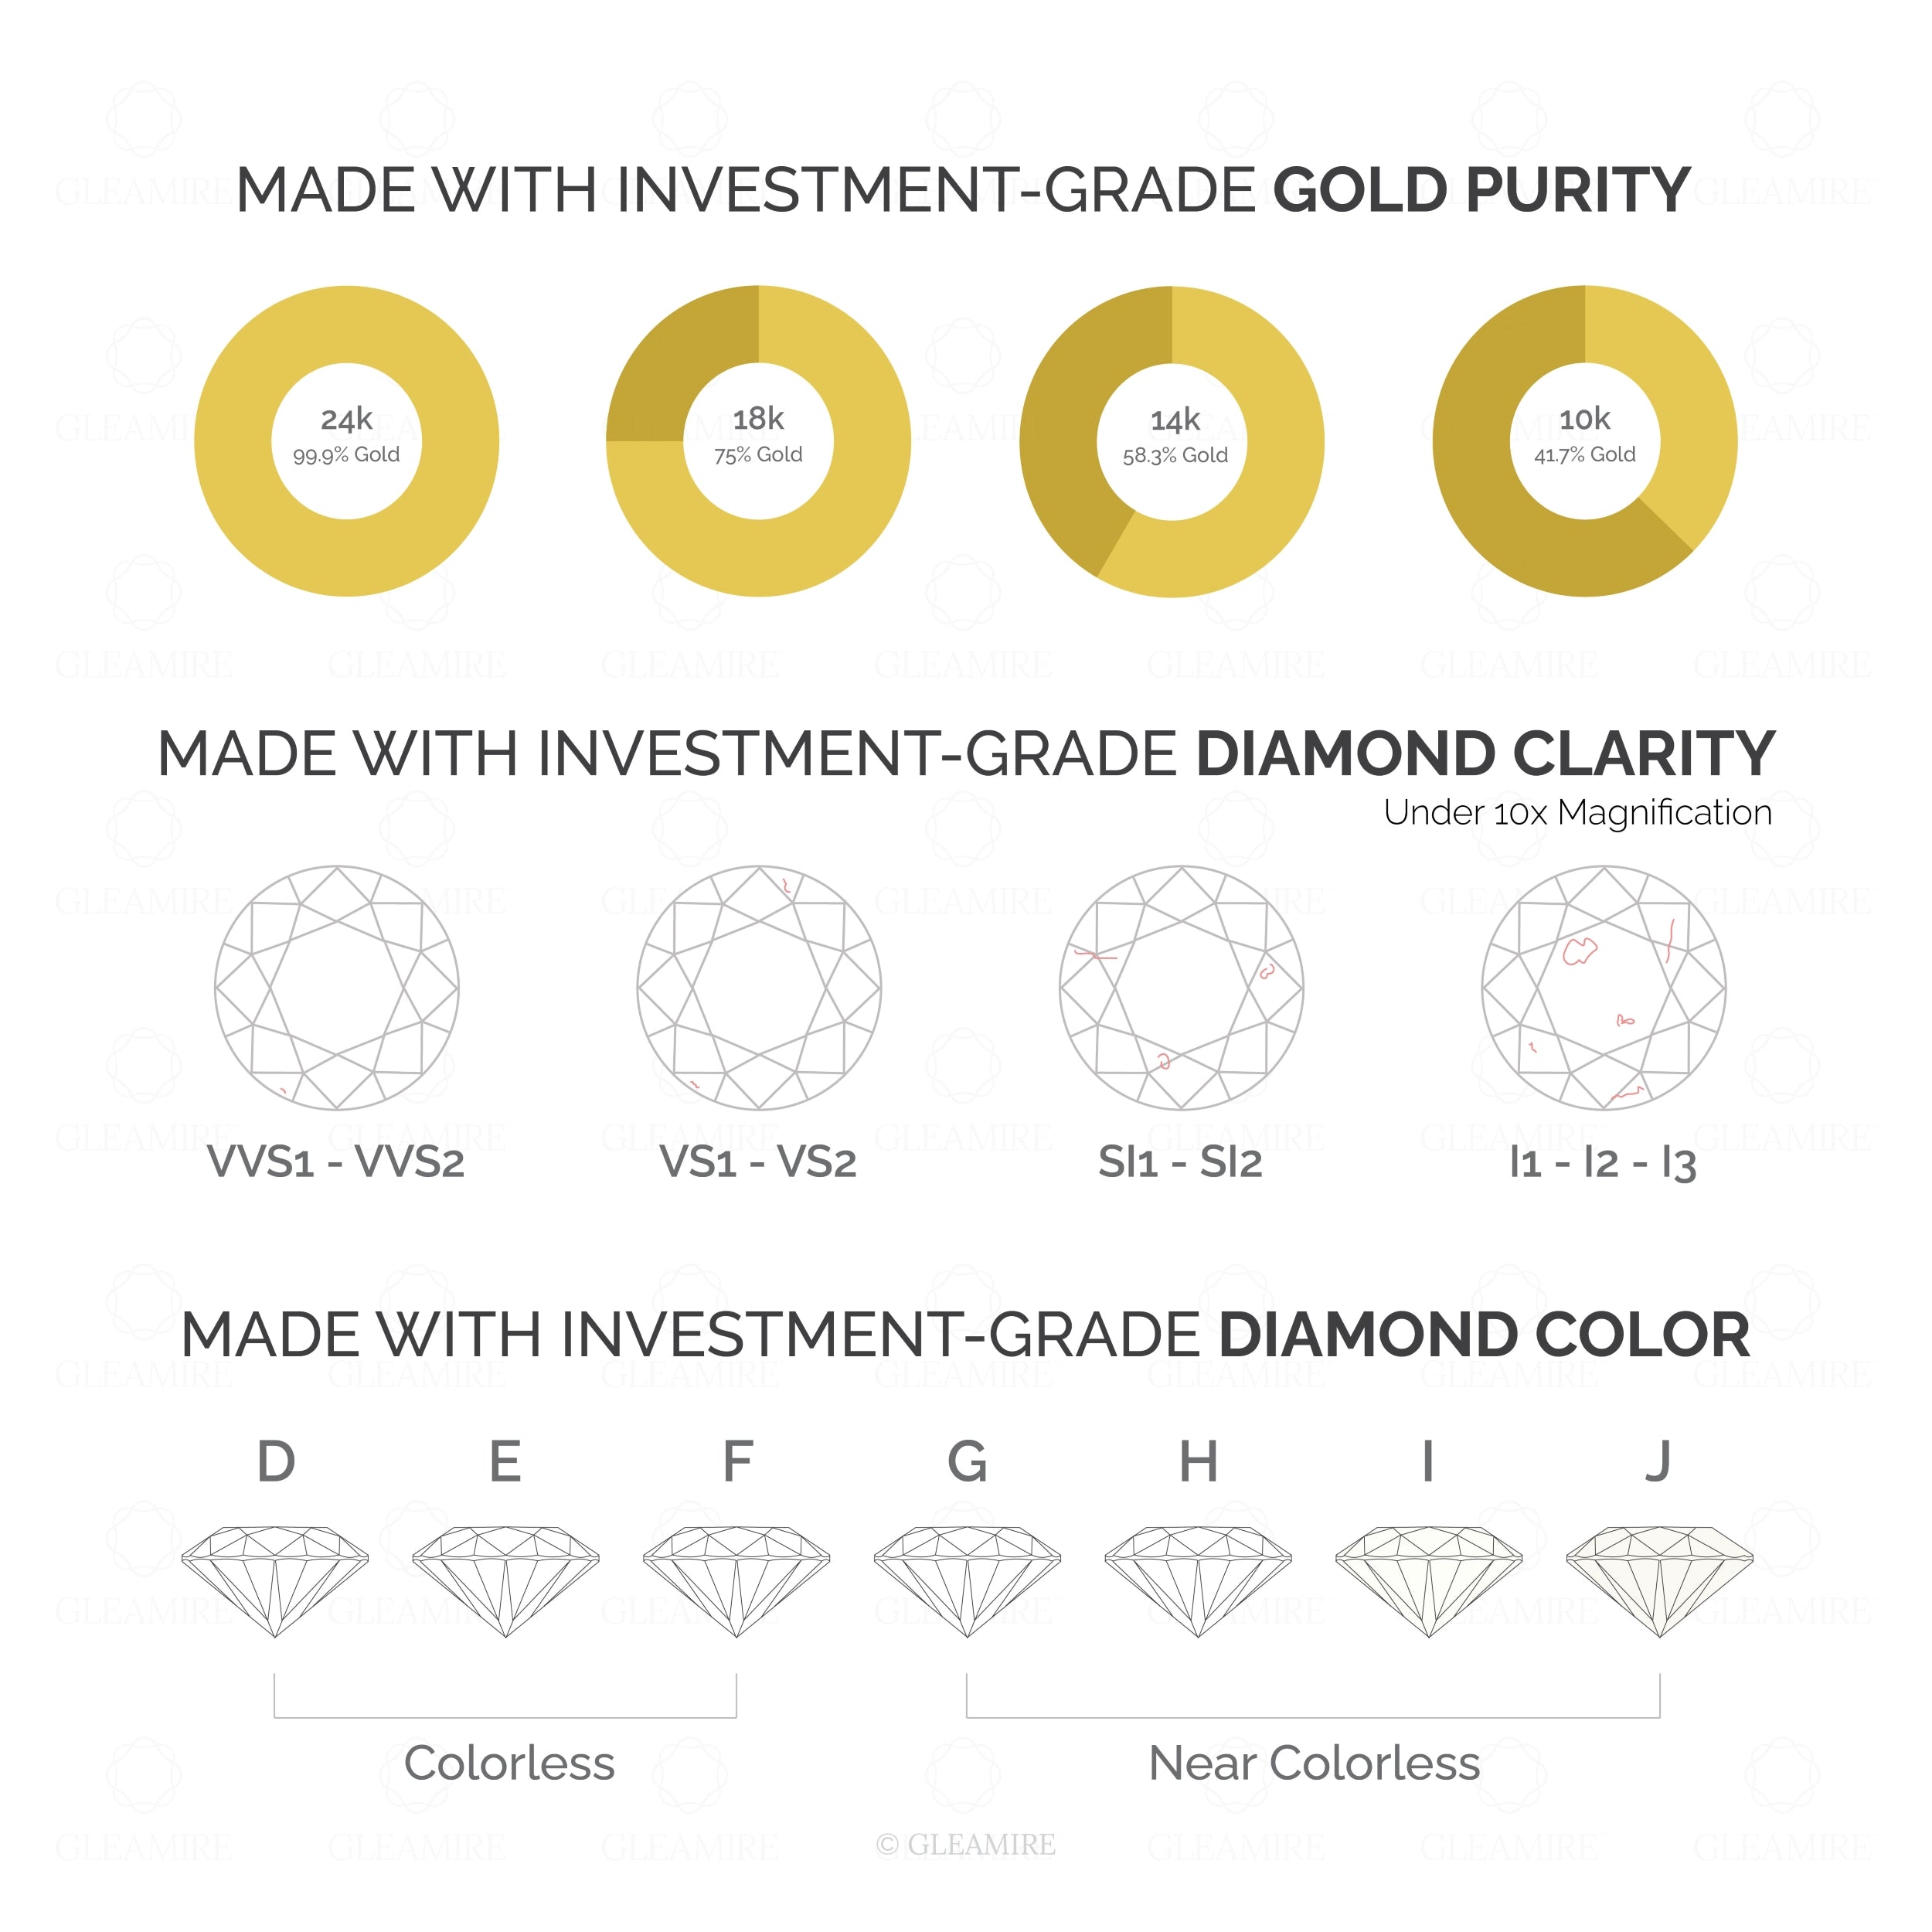 Certified 14K Gold 0.6ct Natural Diamond F-I1 Wedding Thin Single Full Band White Ring